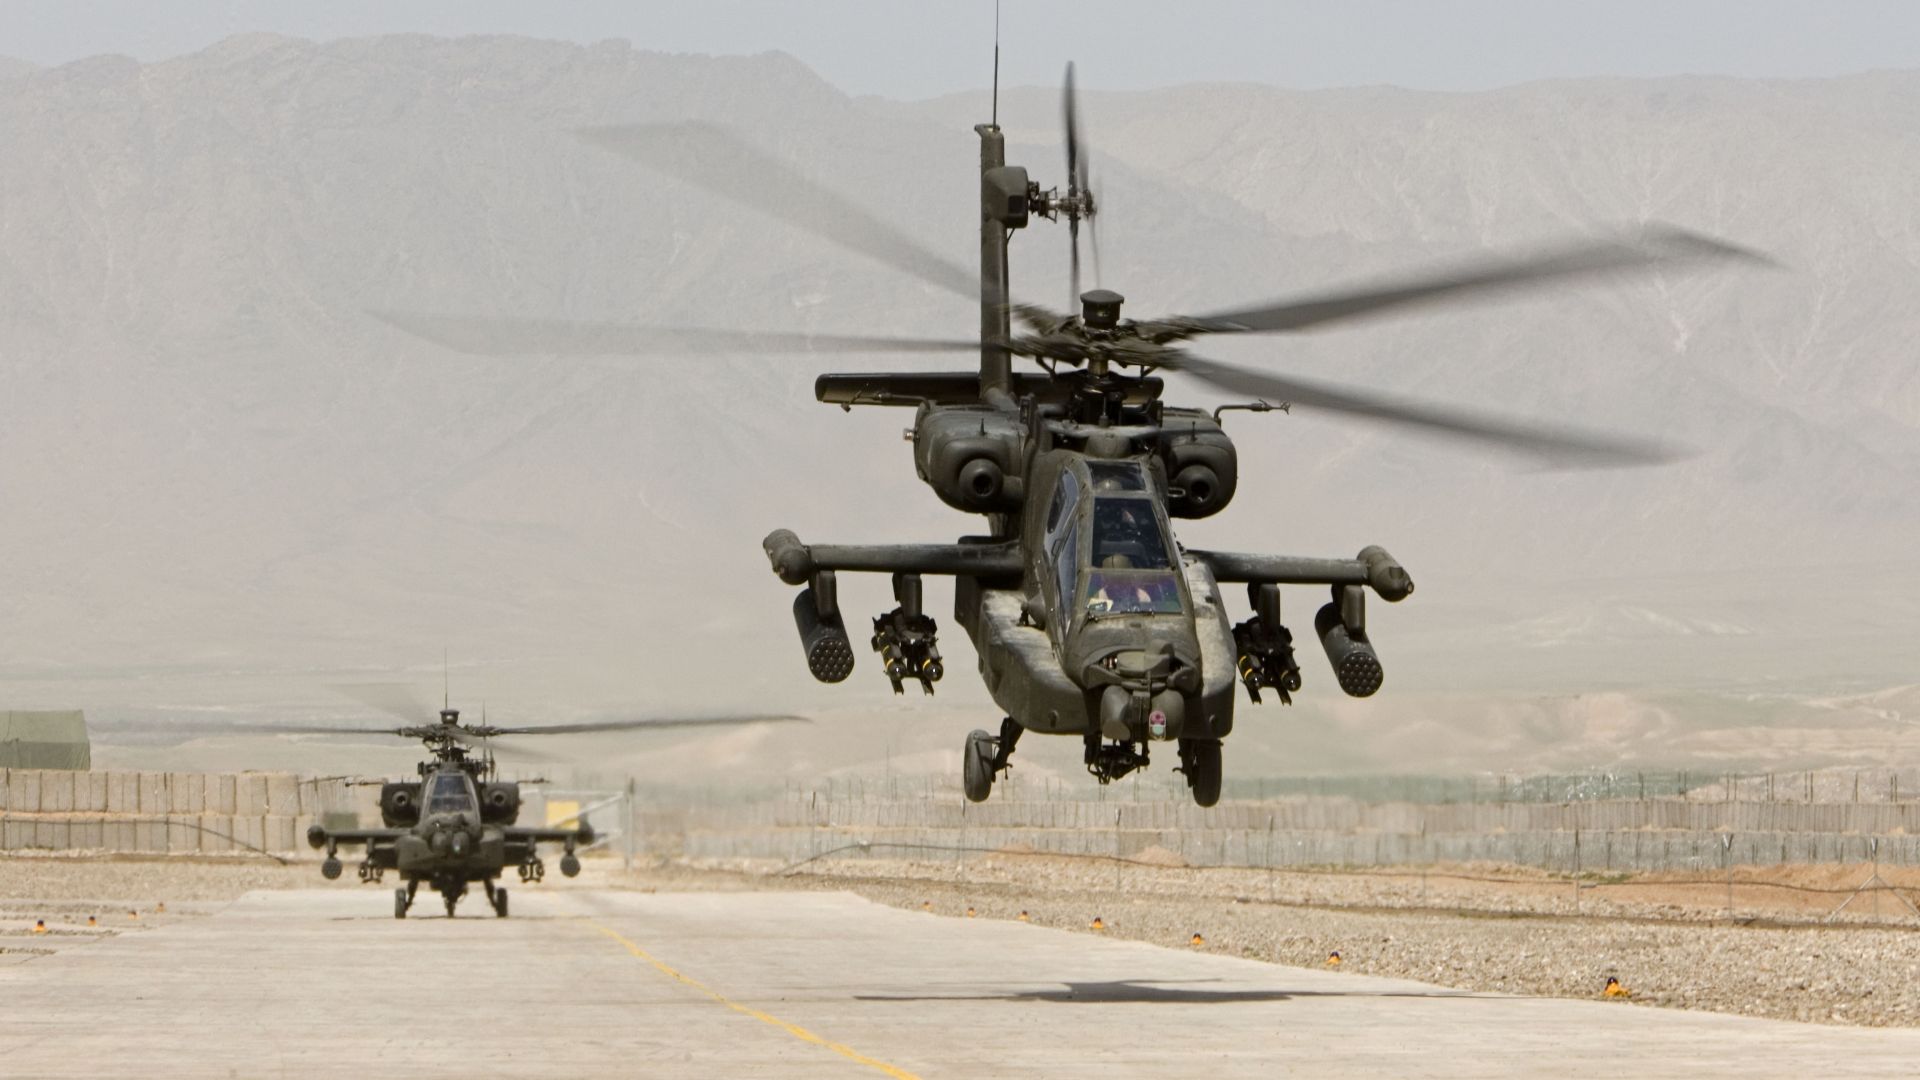 AH-64 Апач, ударный вертолёт, Армия США, AH-64, Apache, attack helicopter, US Army, U.S. Air Force (horizontal)